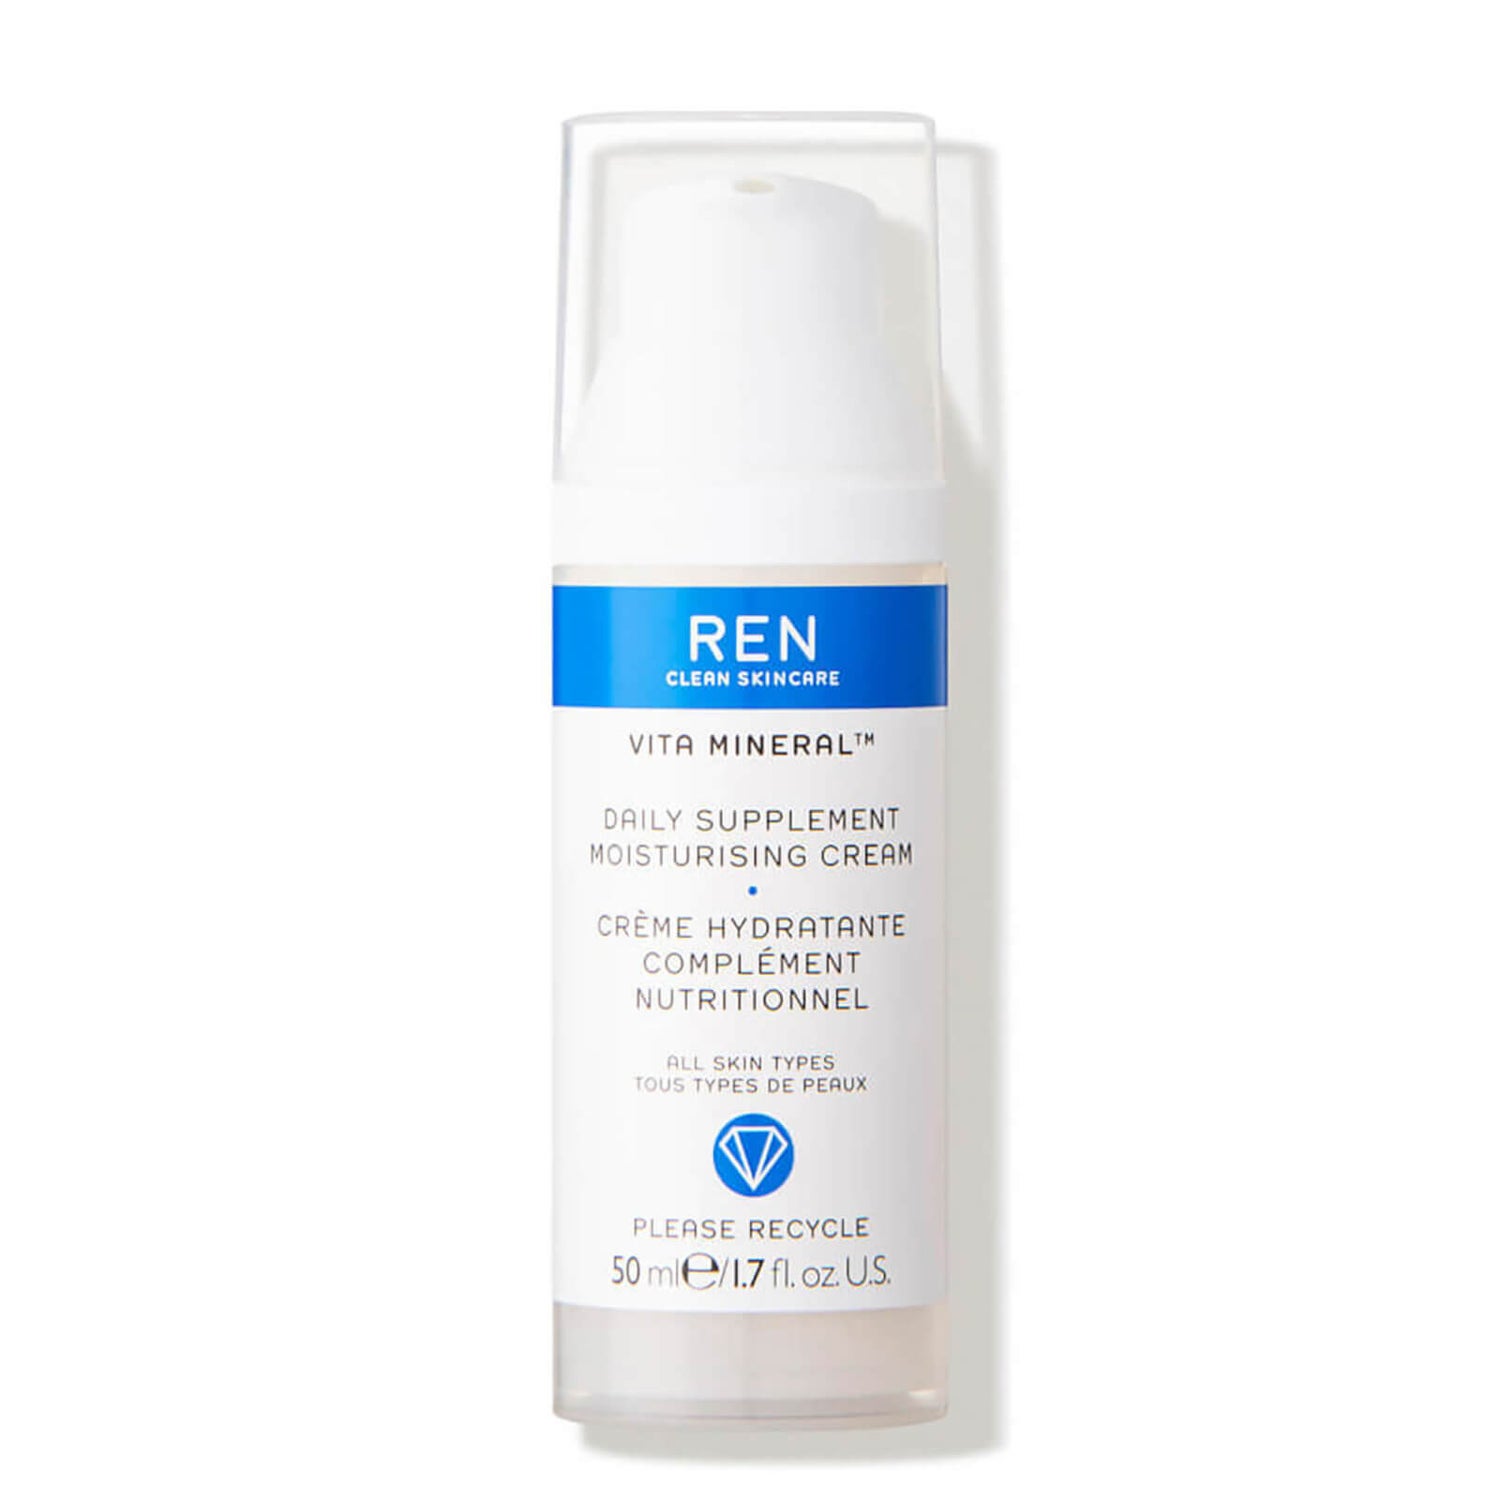 REN Clean Skincare Vita Mineral Daily Supplement Moisturising Cream (1.7 fl. oz.)